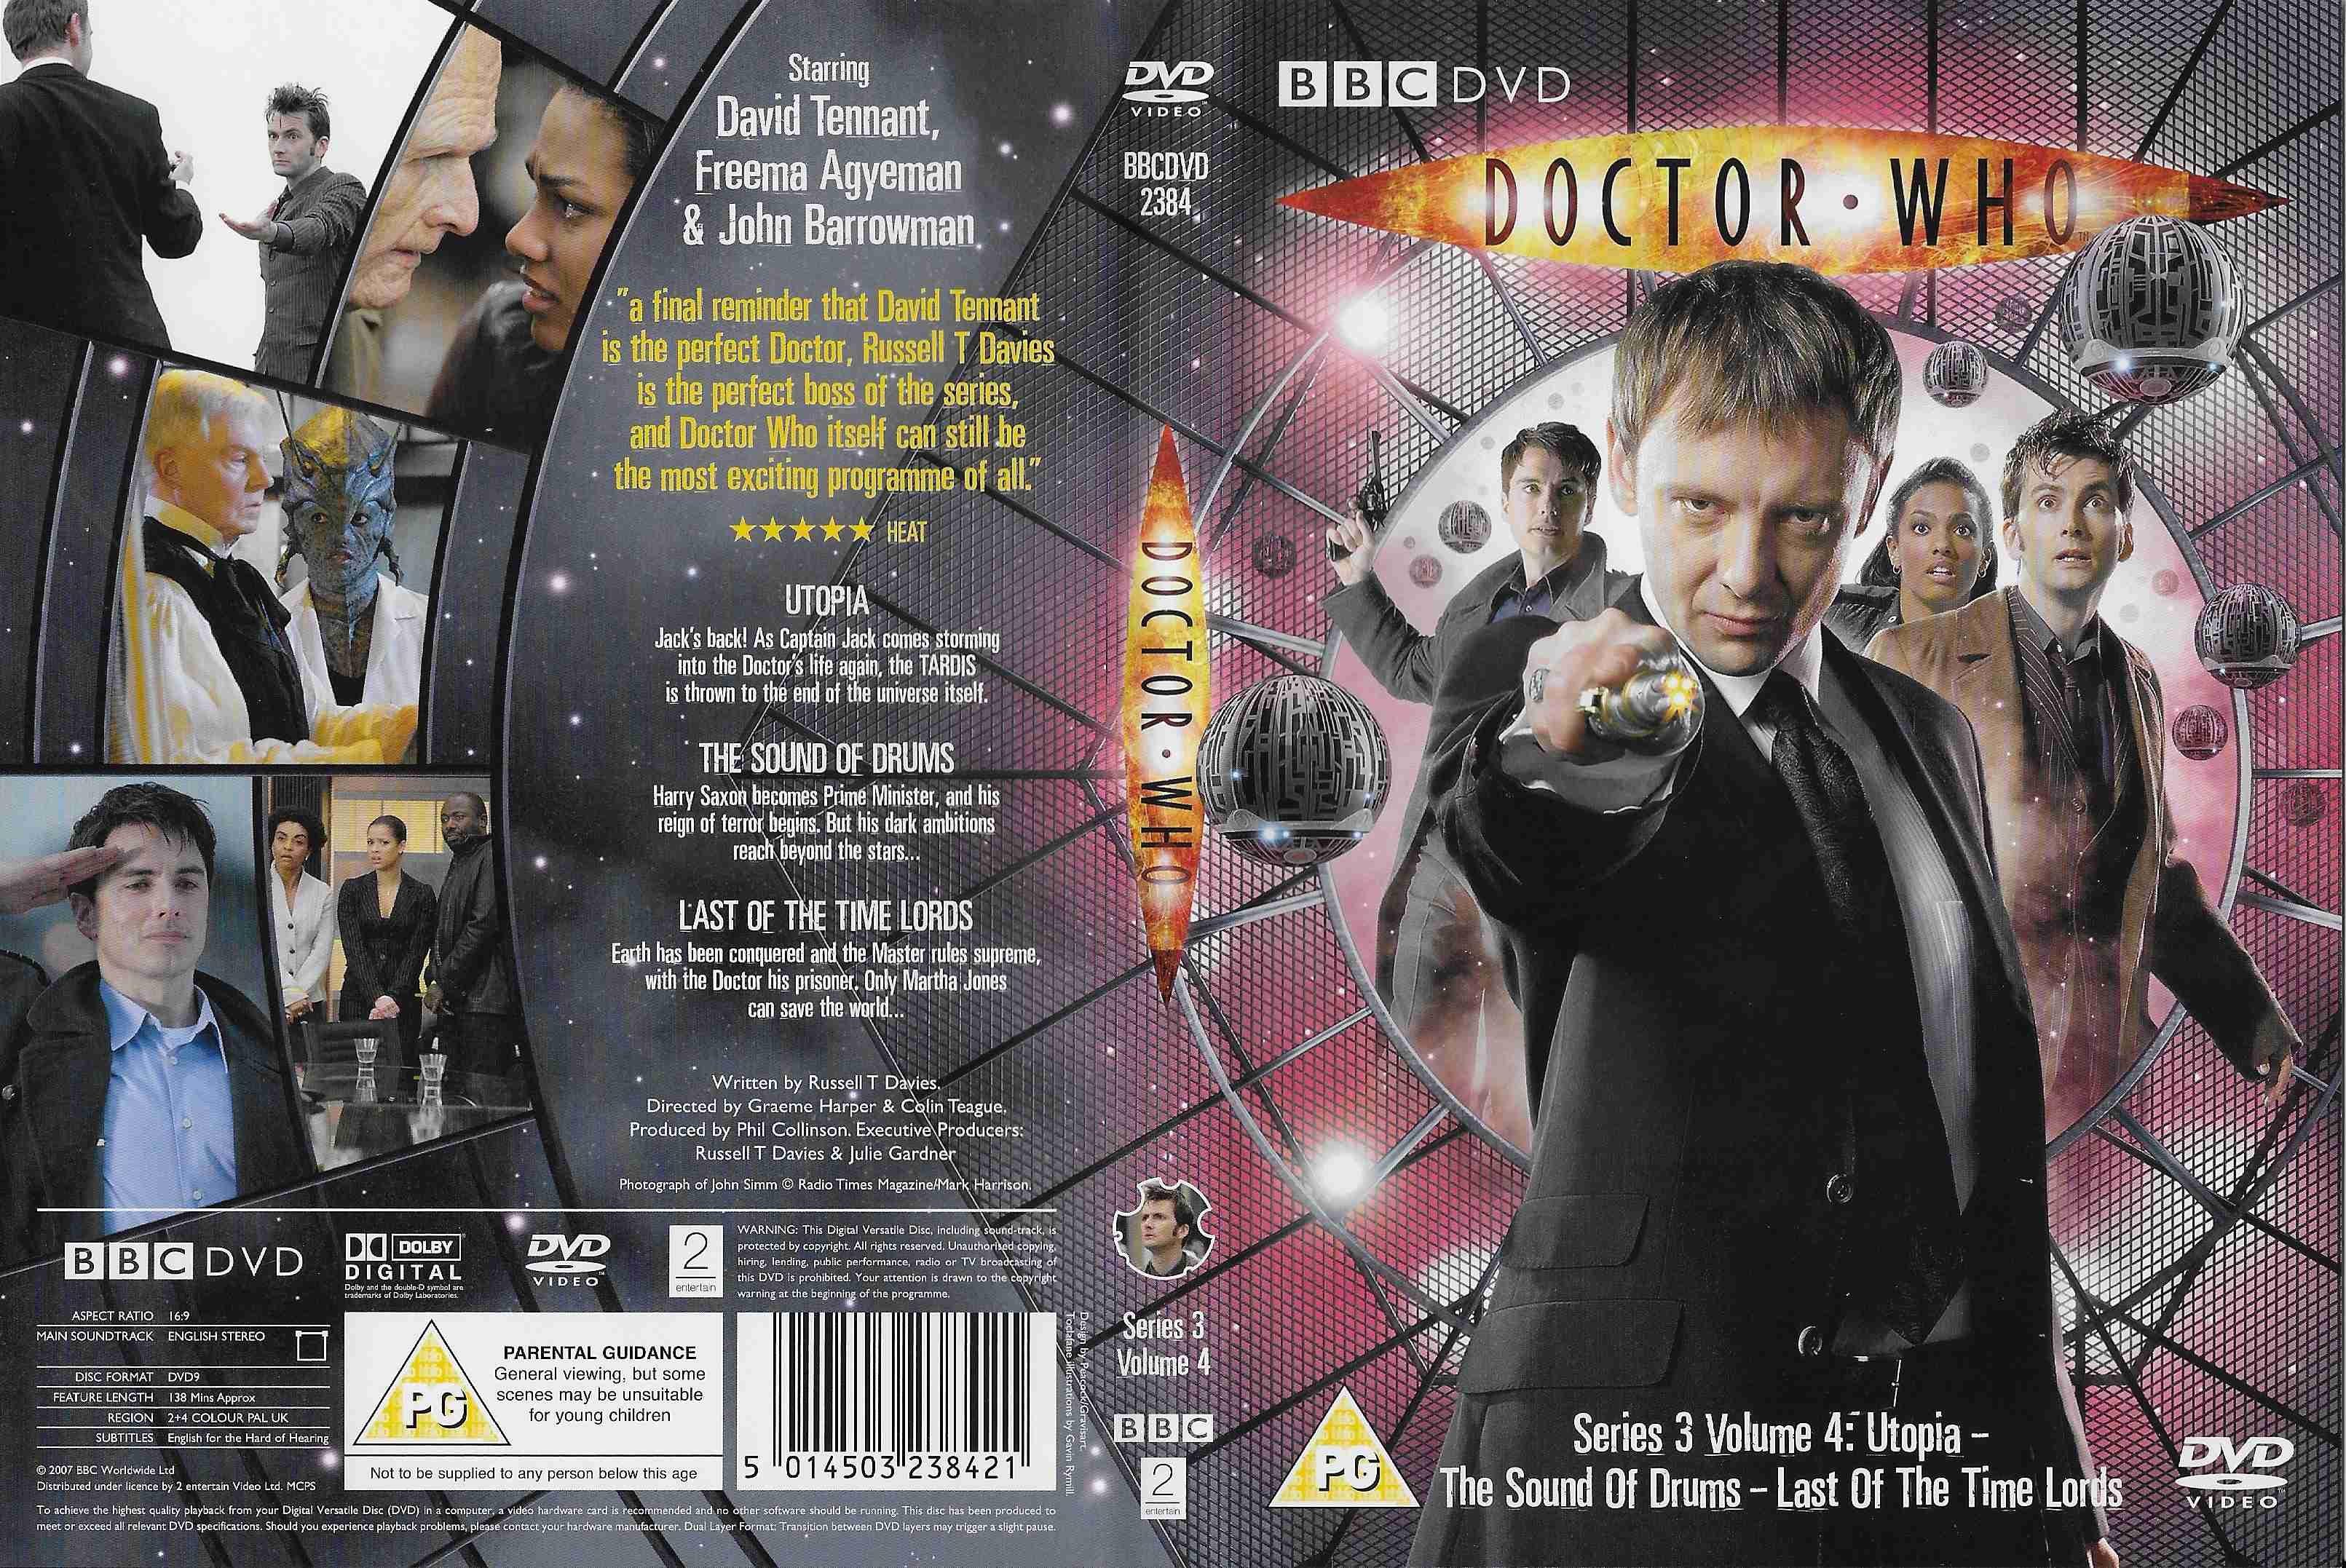 Back cover of BBCDVD 2384